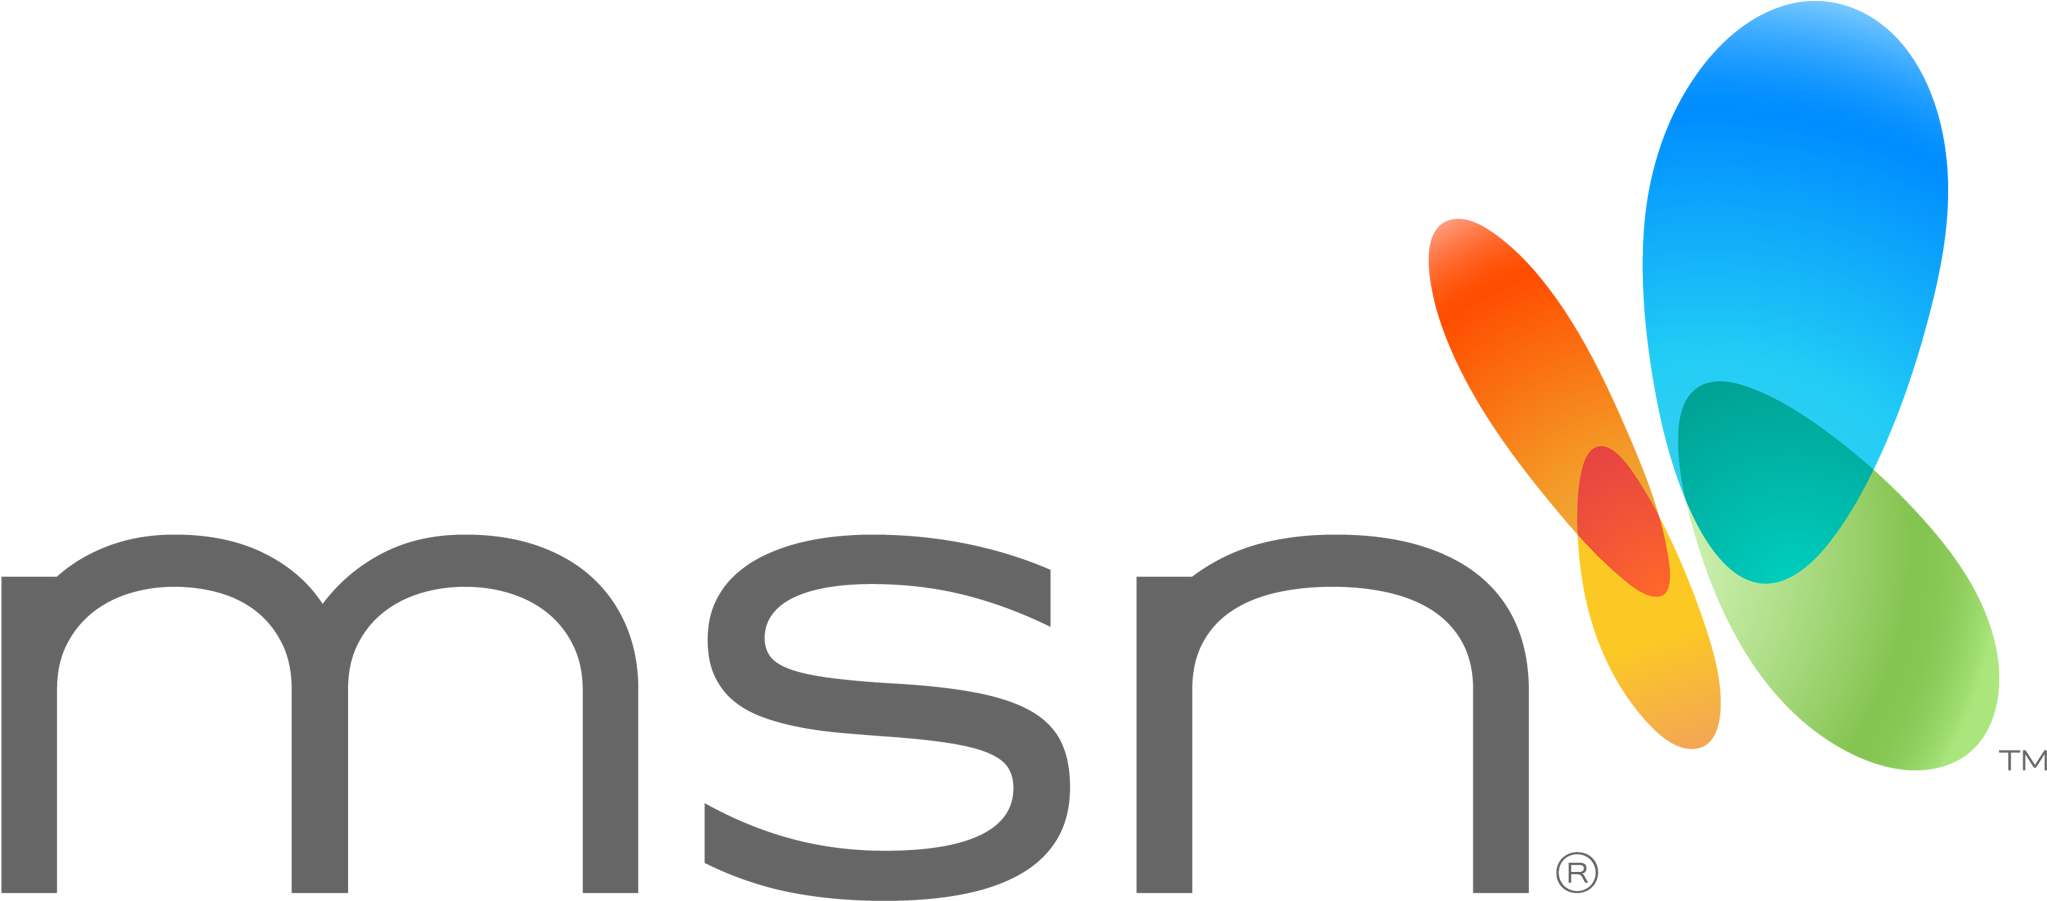 Msn Logo Real Estate Estate Agent Business - New Msn (2272x1704)